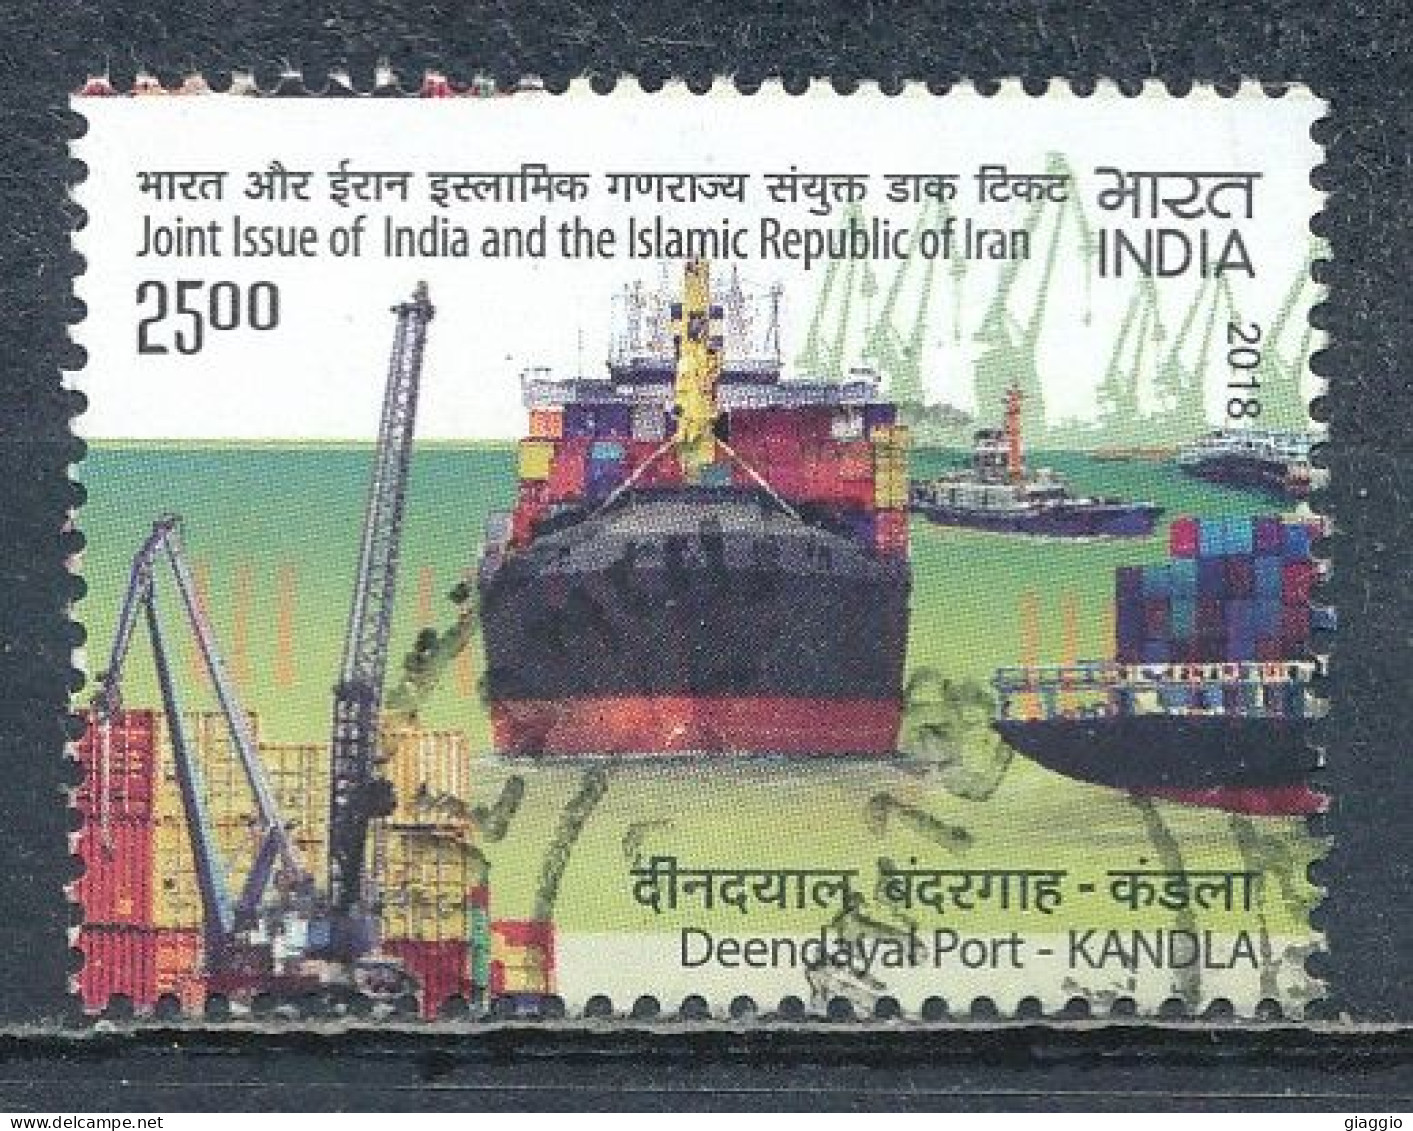 °°° INDIA 2018 - MI 3360 °°° - Used Stamps